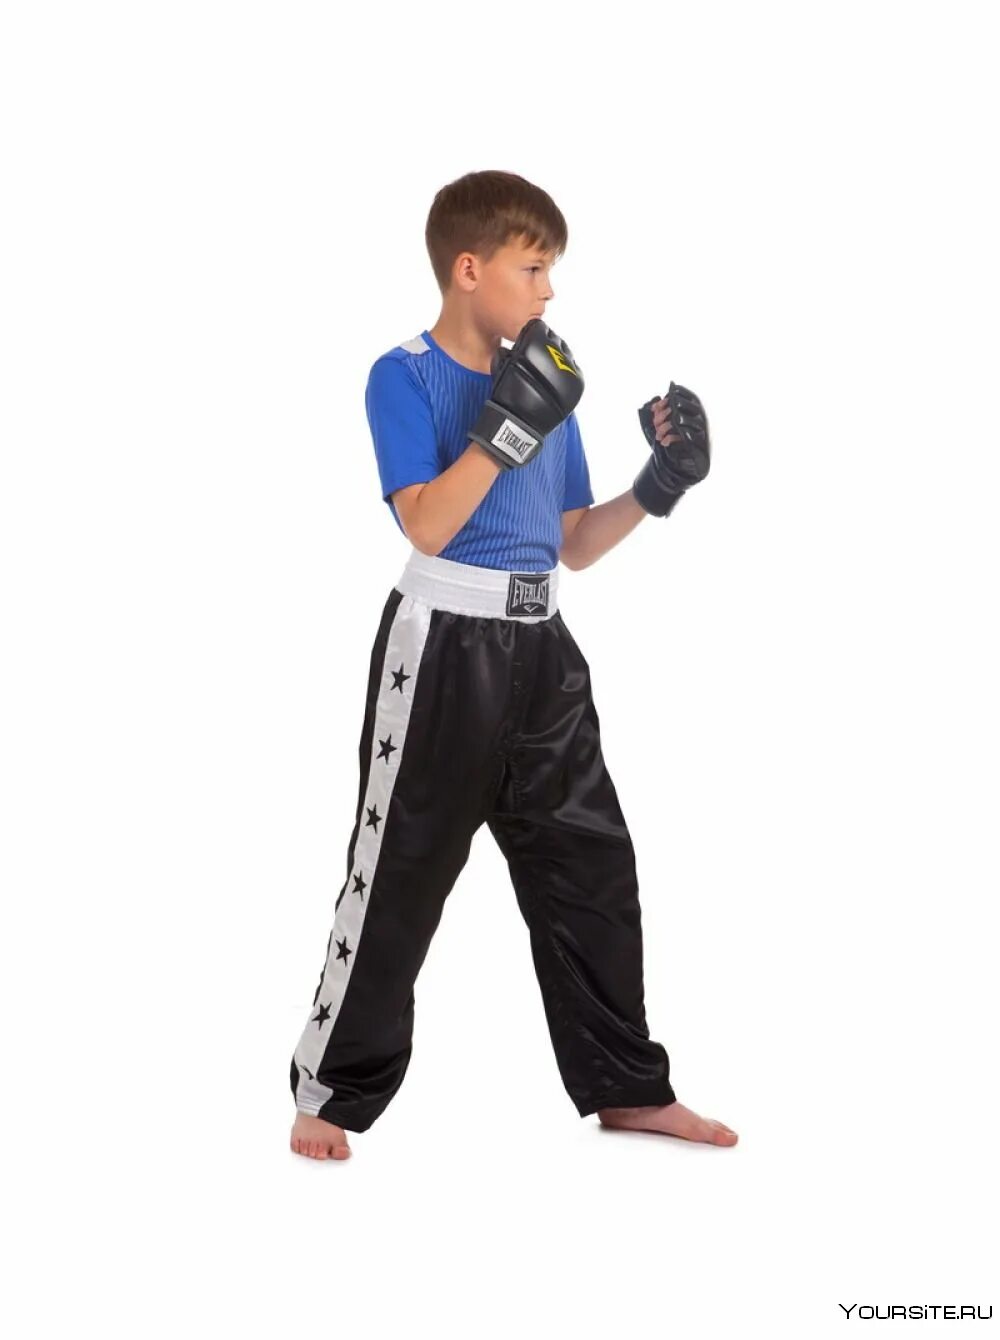 Кикбоксинг одежда. Шаровары Everlast Kickboxing. Штаны для кикбоксинга Everlast. Штаны для кикбоксинга детские. Форма для кикбоксинга.